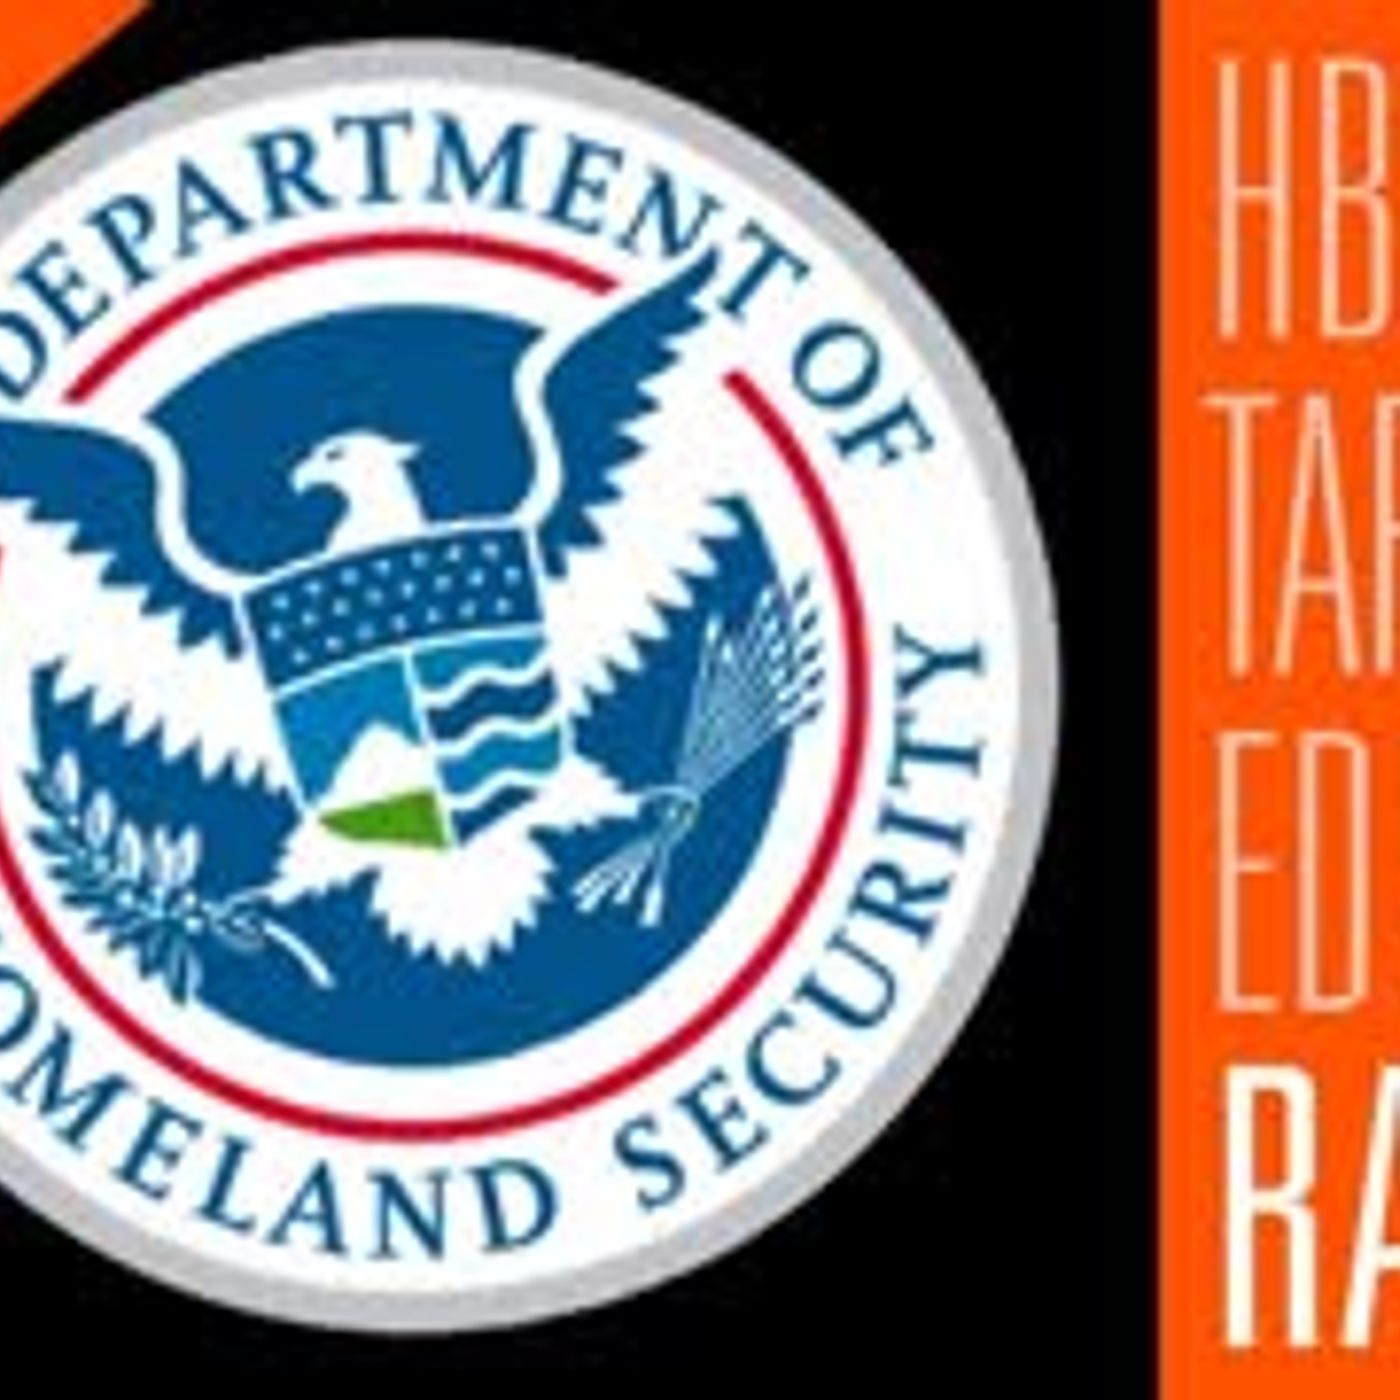 Honey Badger Radio targeted by Homeland Security Part 2 | Rantzerker 196